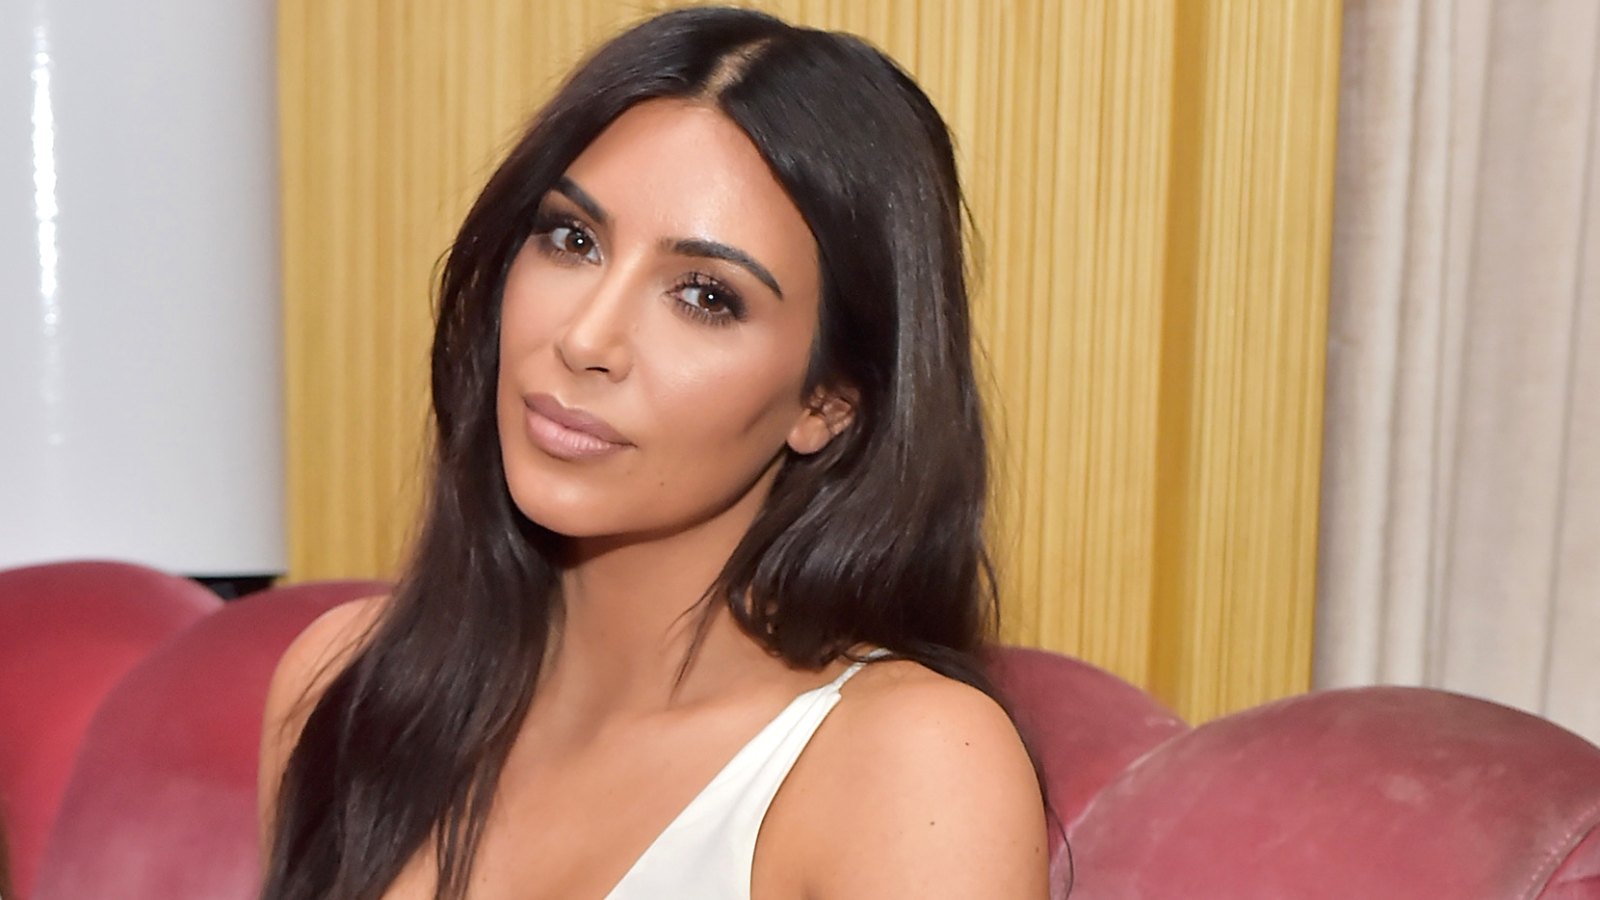 Kim Kardashian fights back photoshop